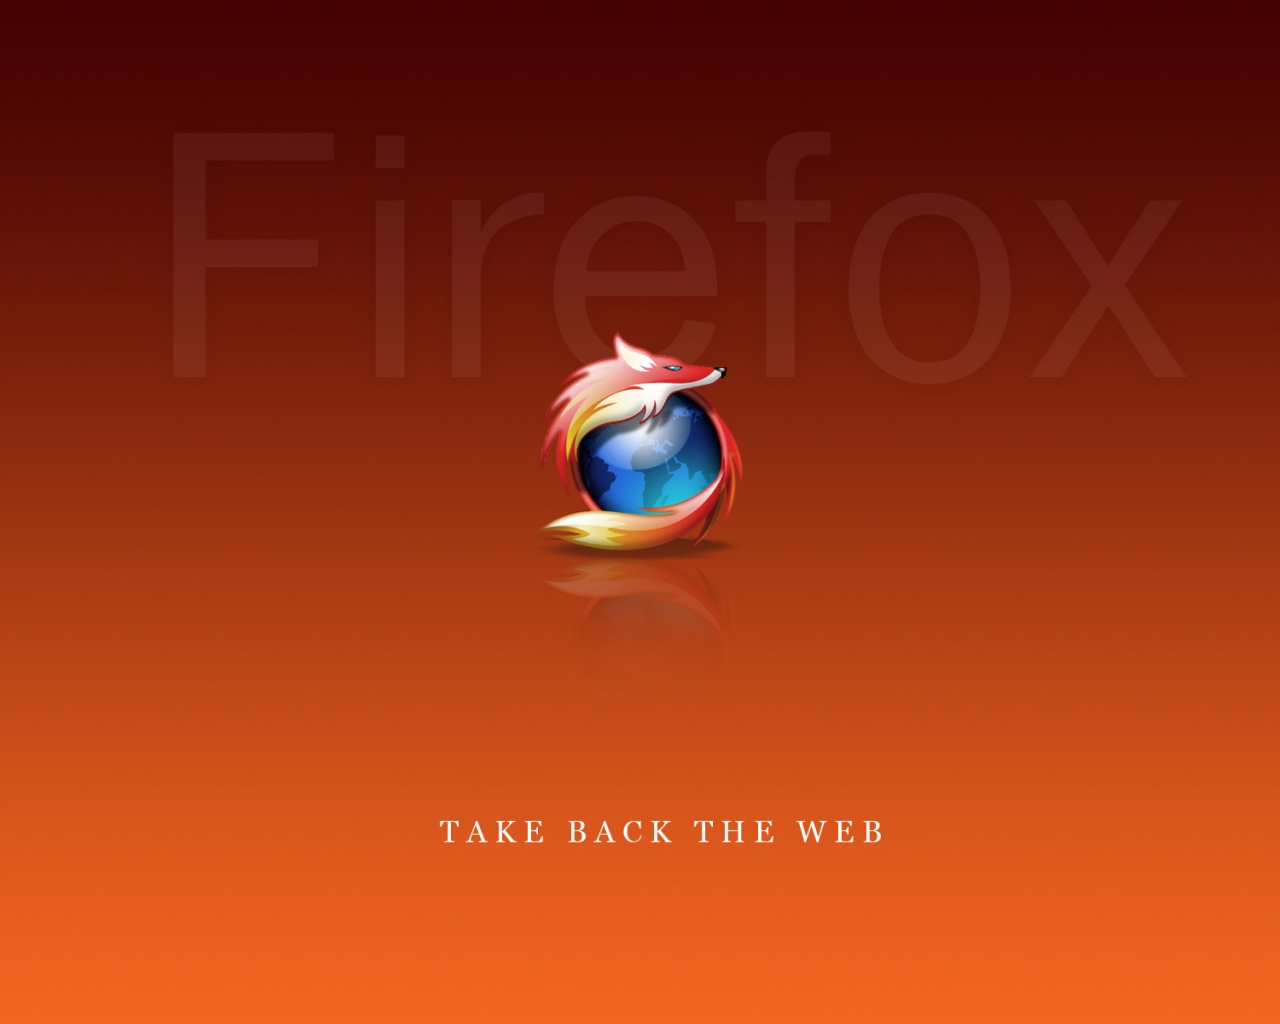 ... Firefox Desktop Wallpapers, Firefox Backgrounds ~ Full HD Wallpapers